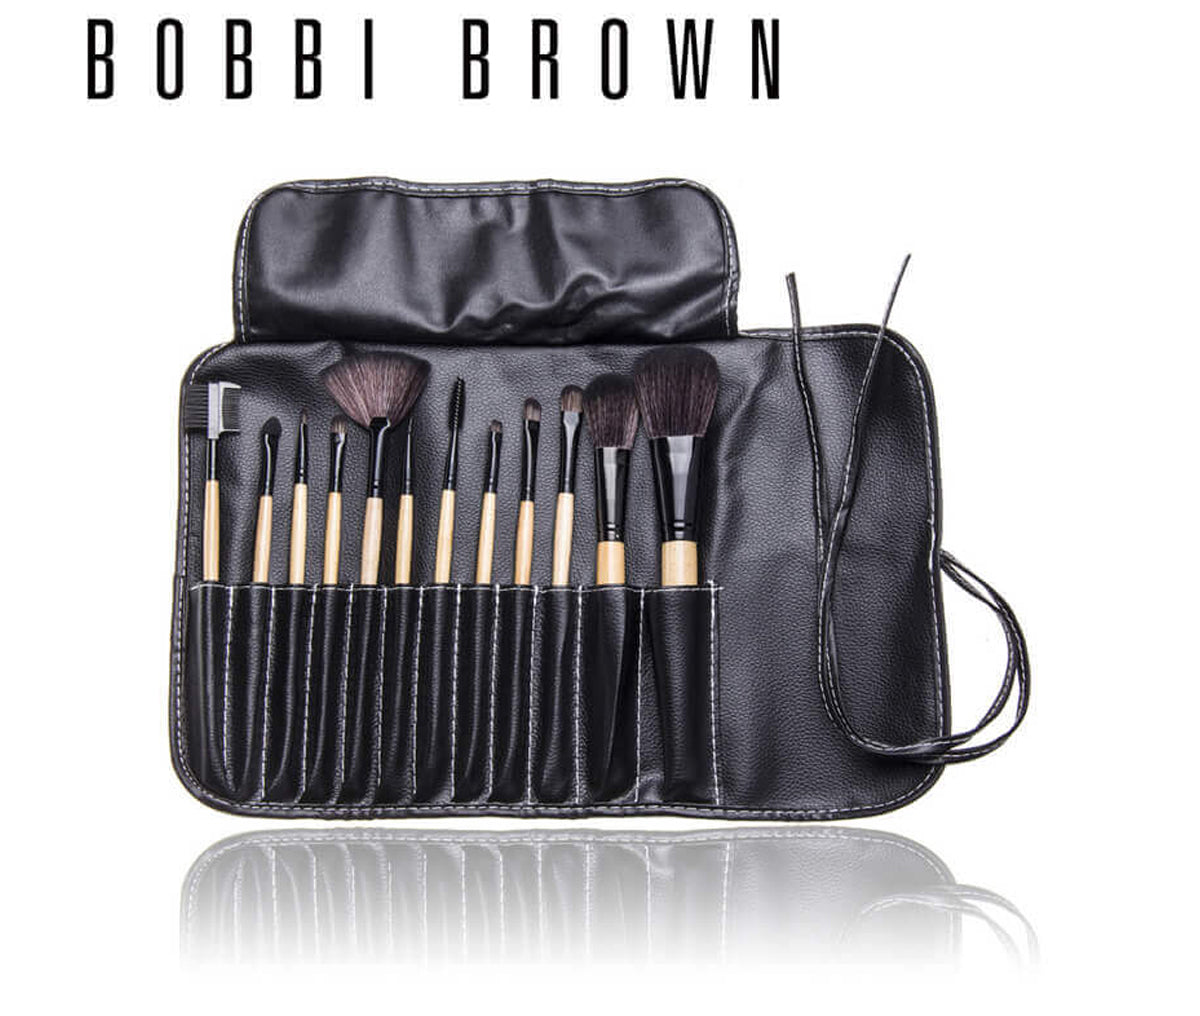 Bobbi Brown Makeup Brush Set